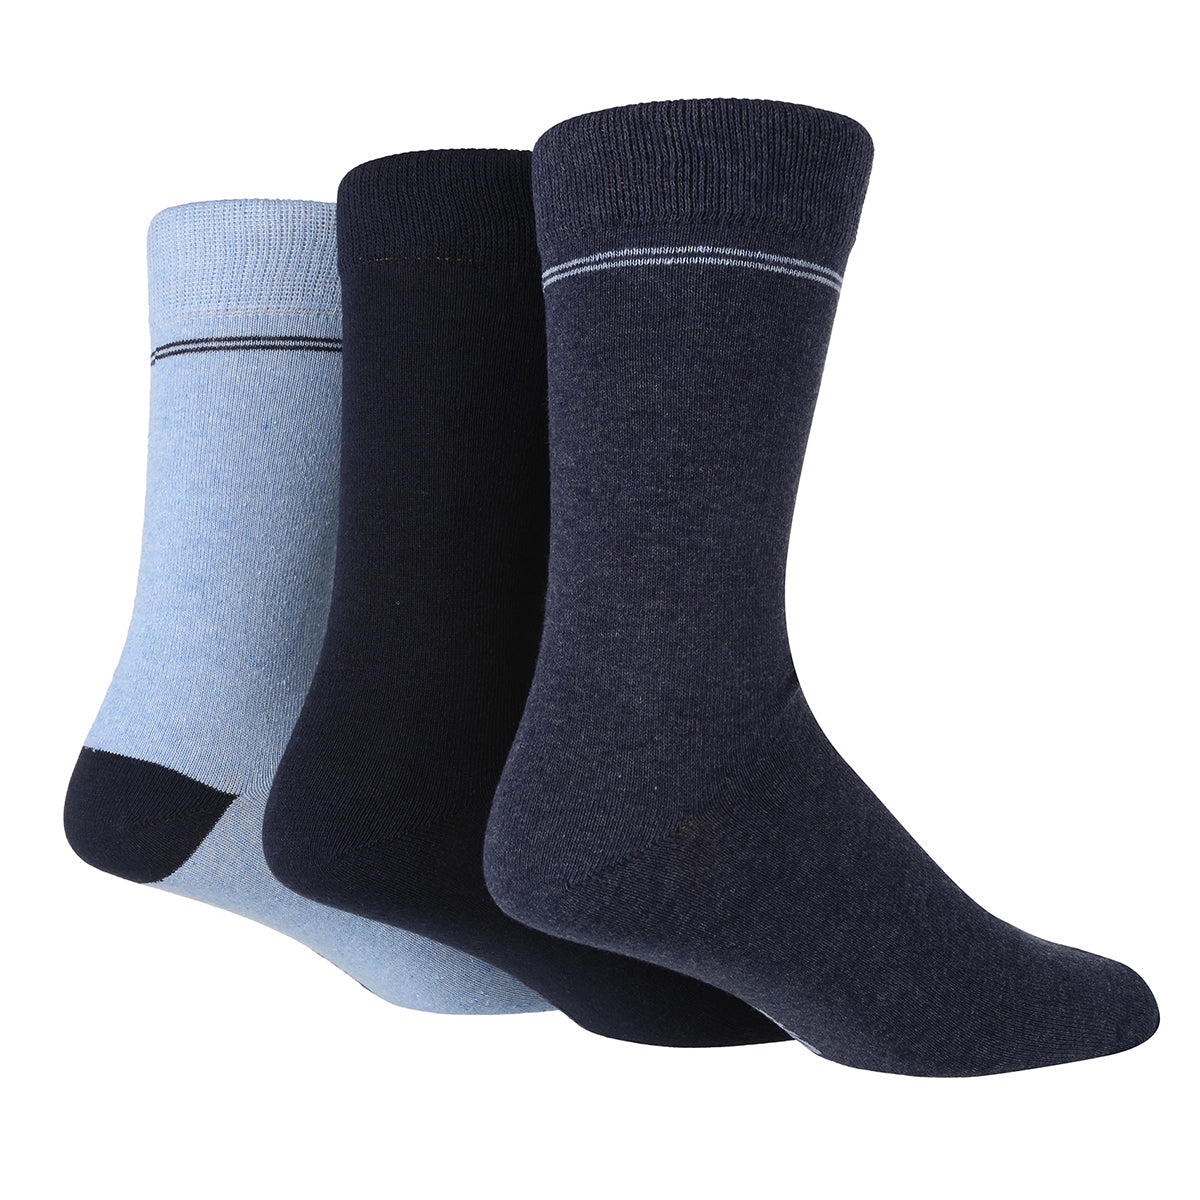 Men's Placement Stripe Socks - 3 Pairs